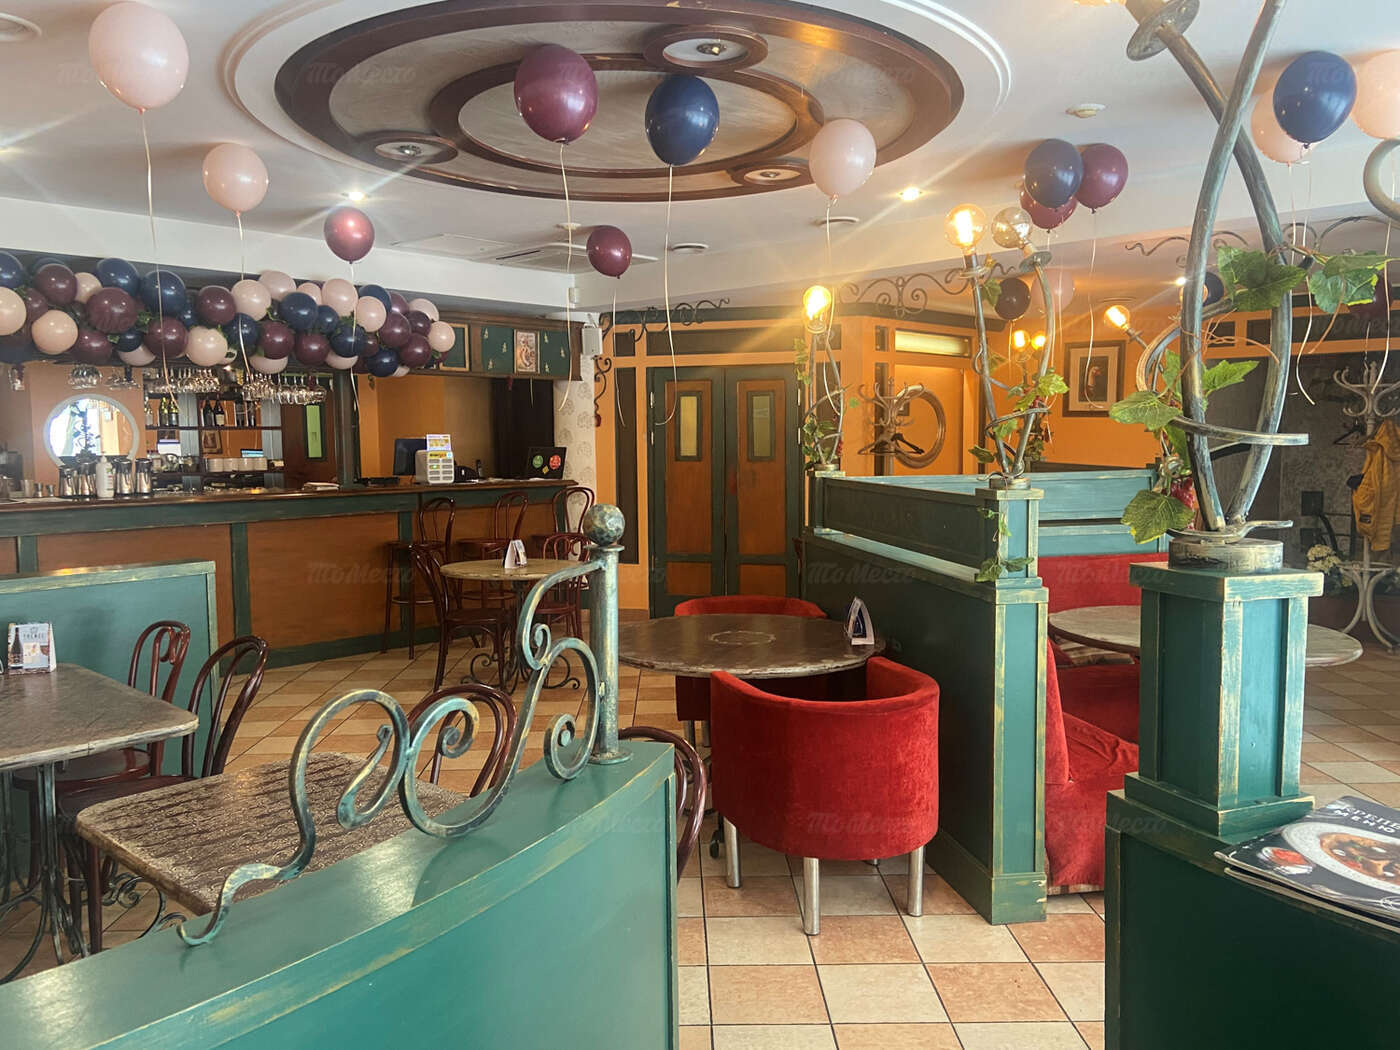 Банкеты кафе Creperie De Paris (Крепери Де Пари) на Русаковской фото 1